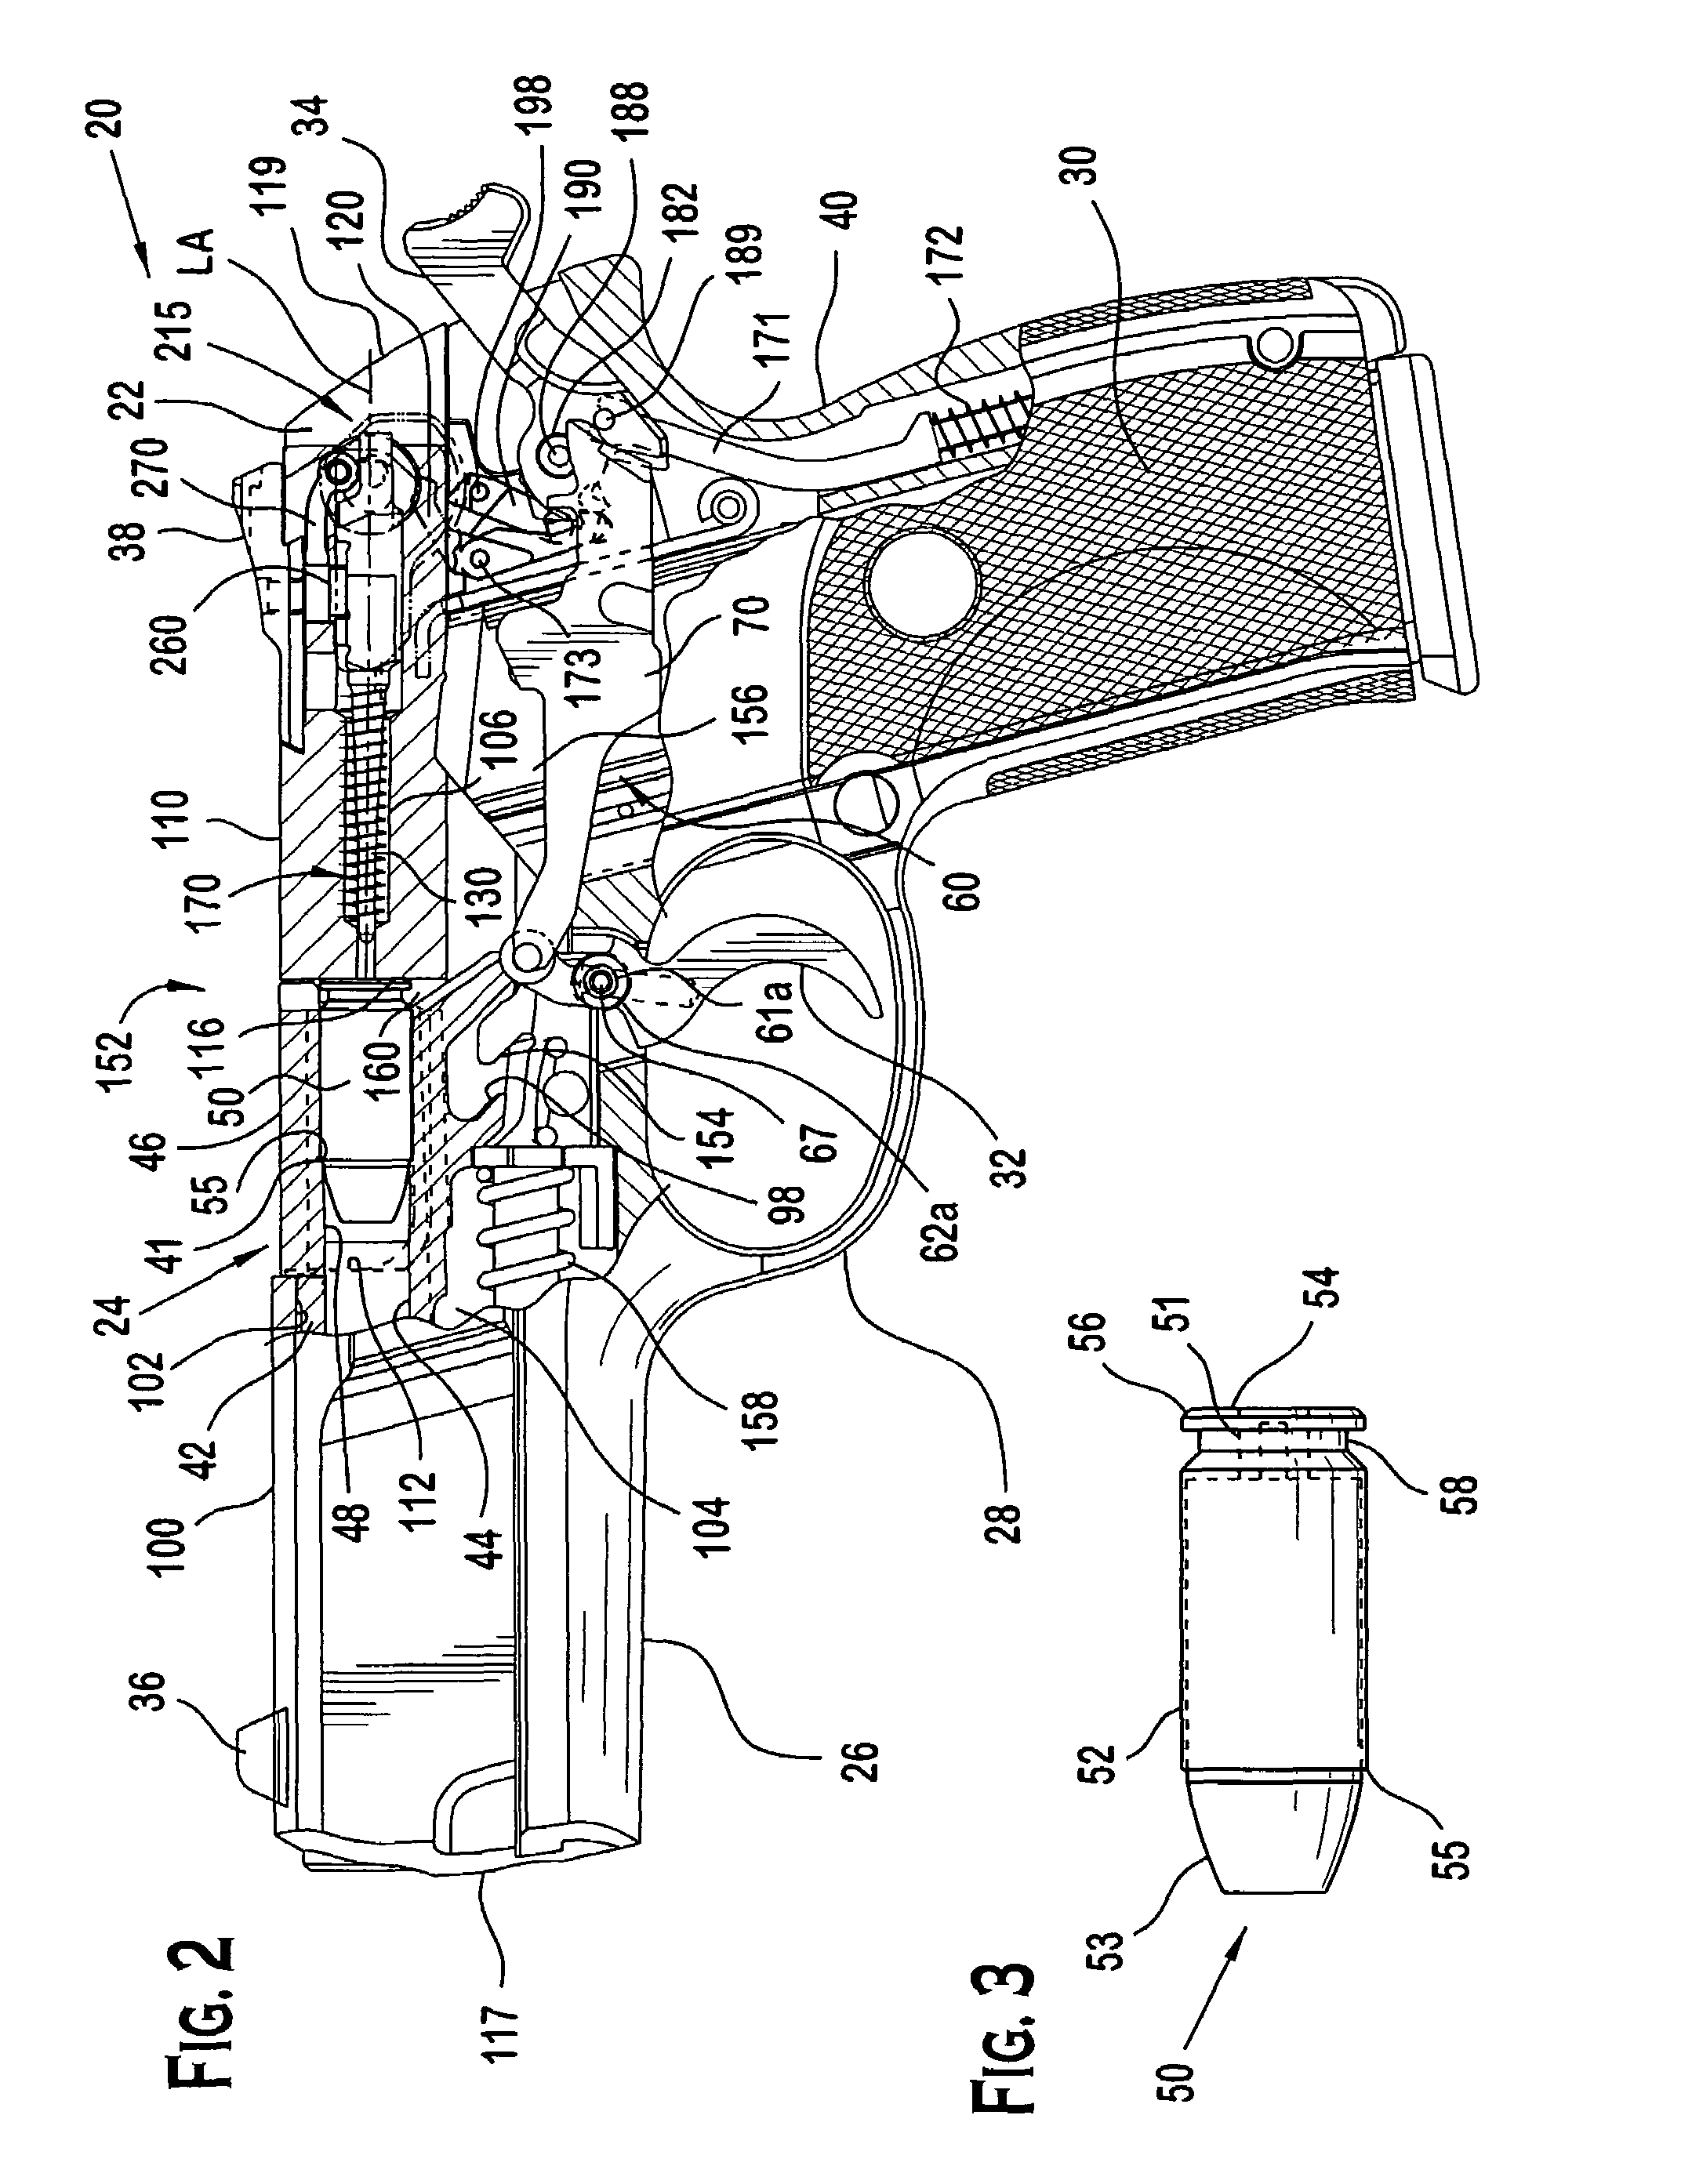 Pistol with firing pin locking mechanism